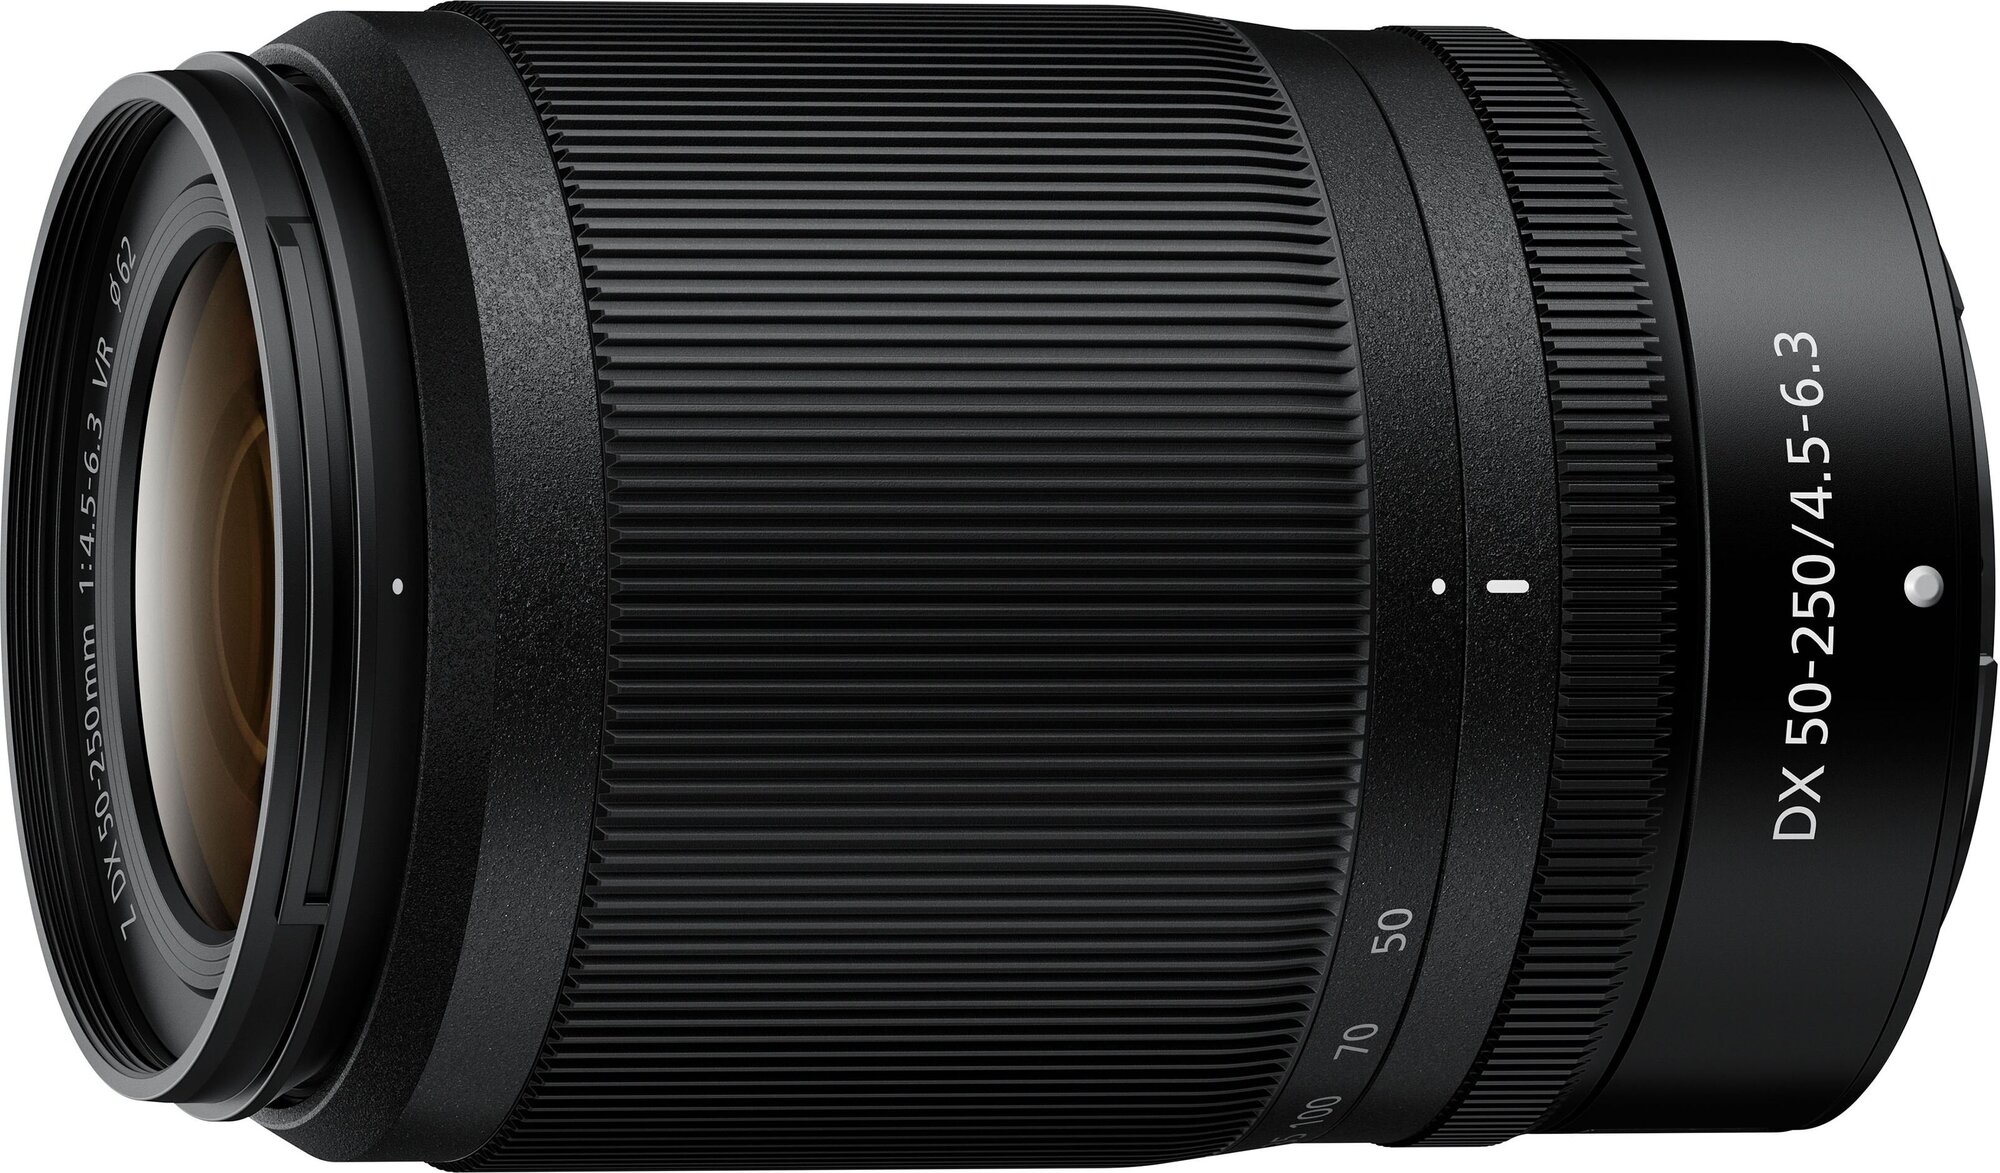 Объектив Nikon Nikkor Z DX 50-250mm F4.5-6.3 VR